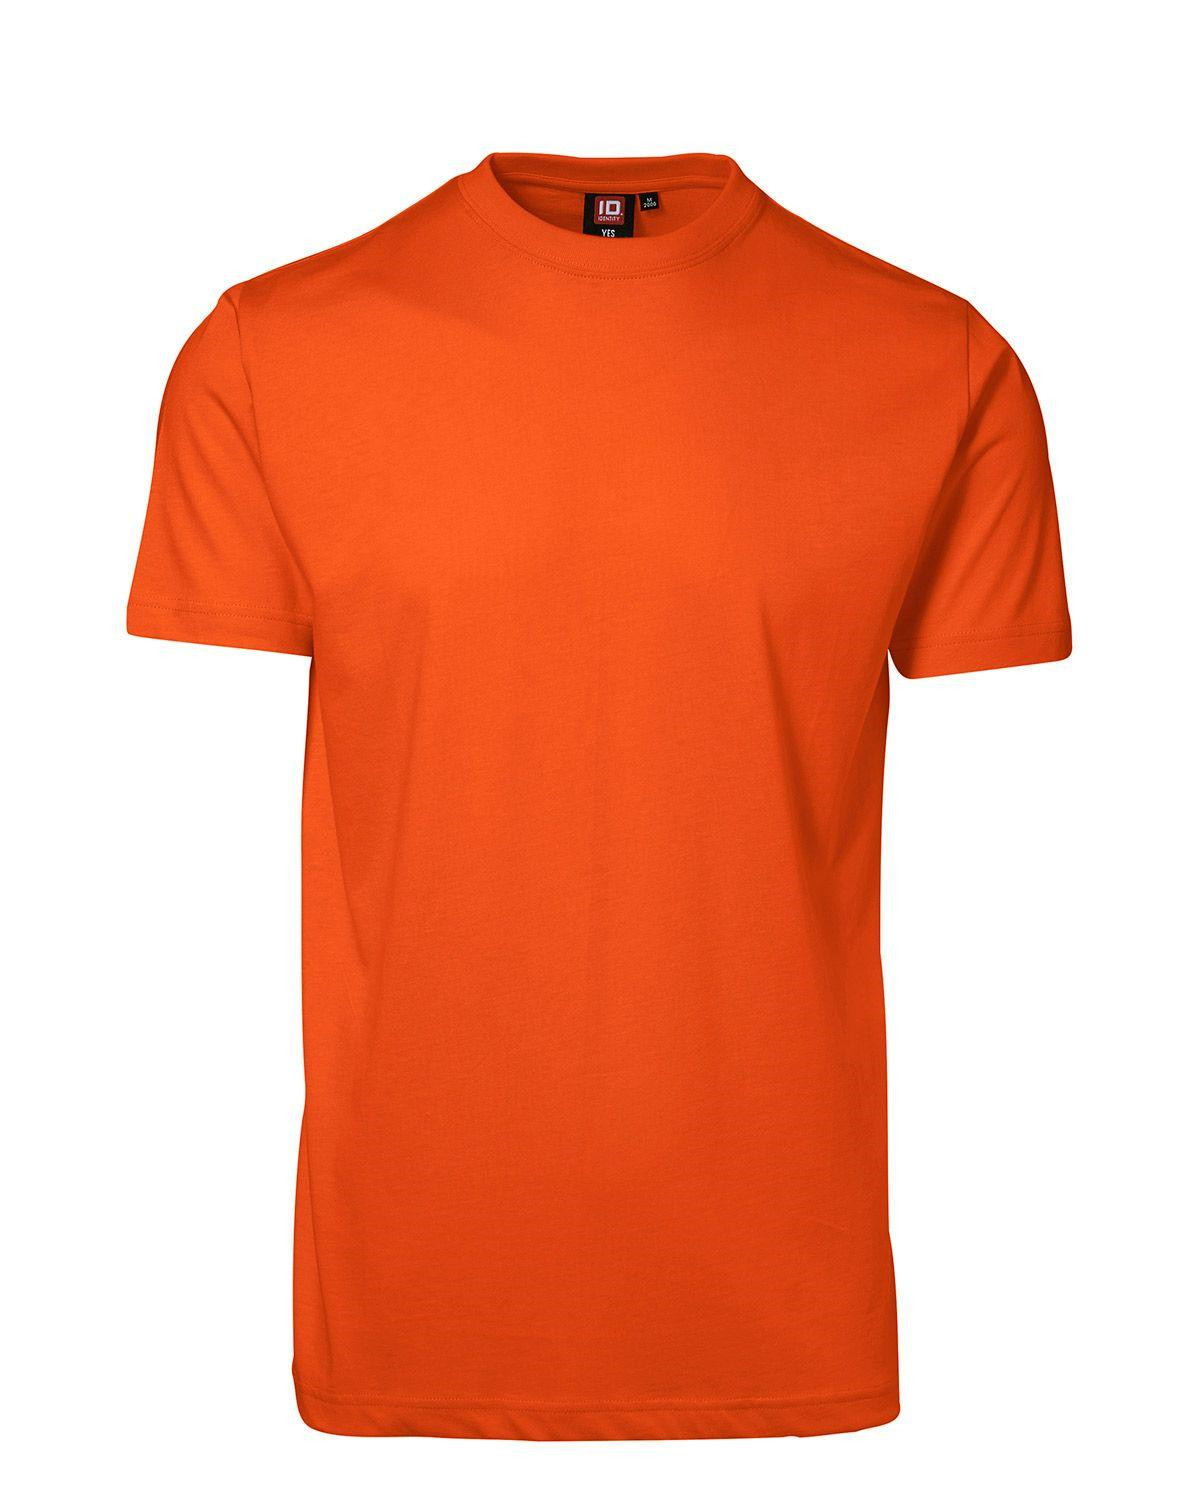 ID YES T-shirt (Orange, L)